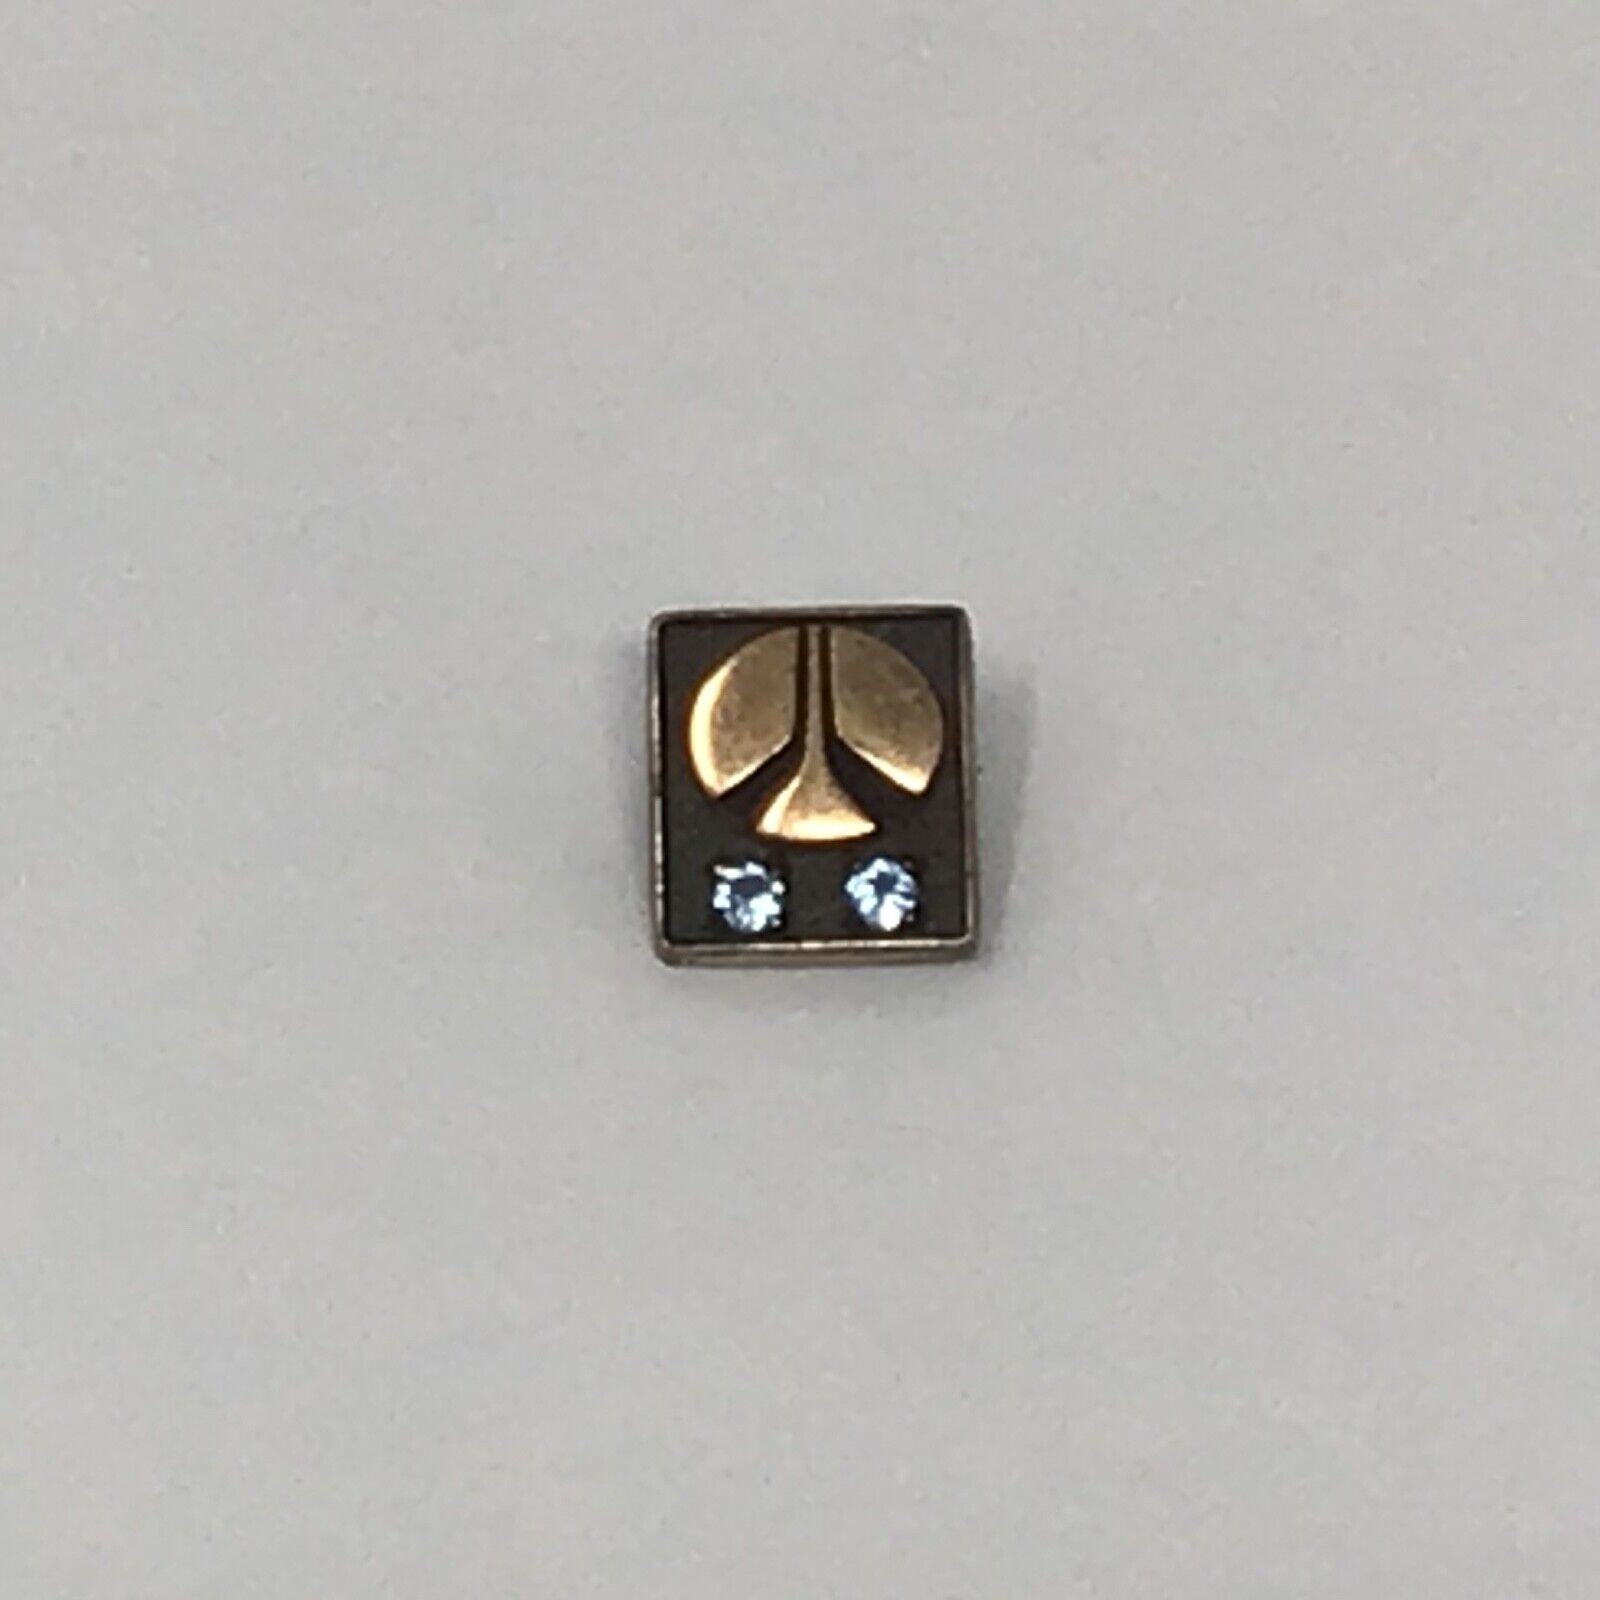 Vintage NASA Rockwell Corporation Emblem Pin  1960s